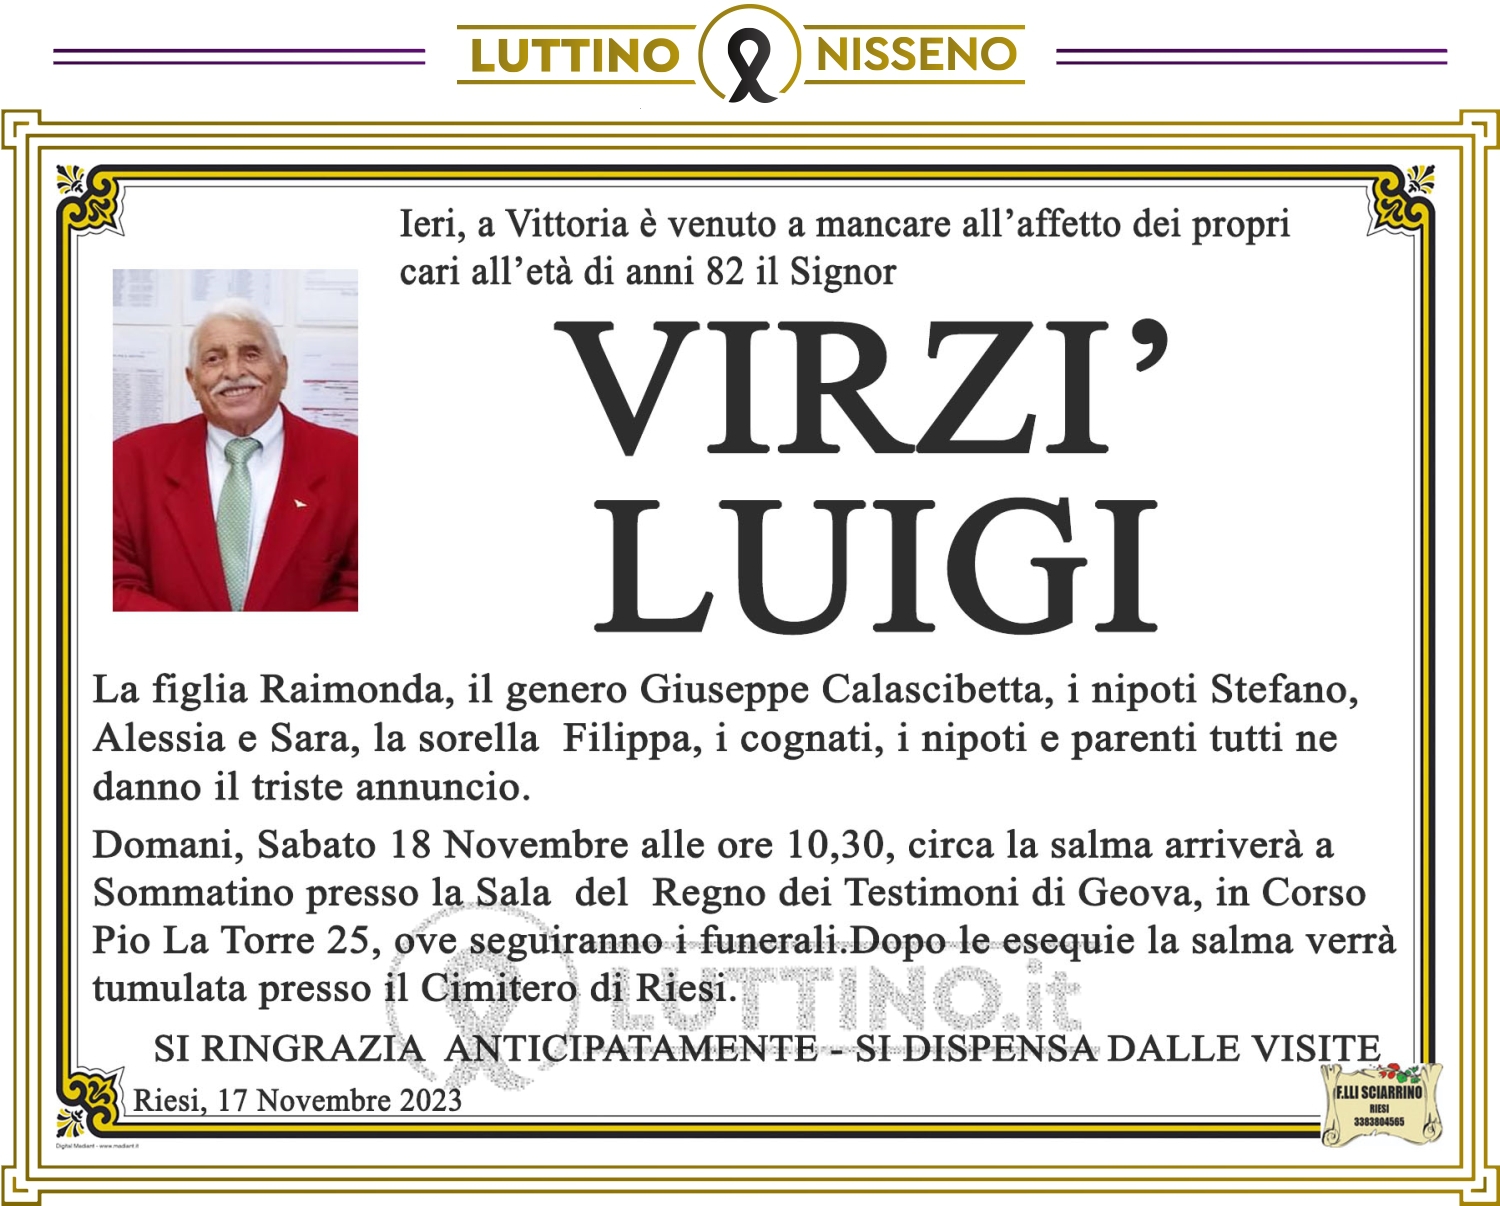 Luigi Virzí